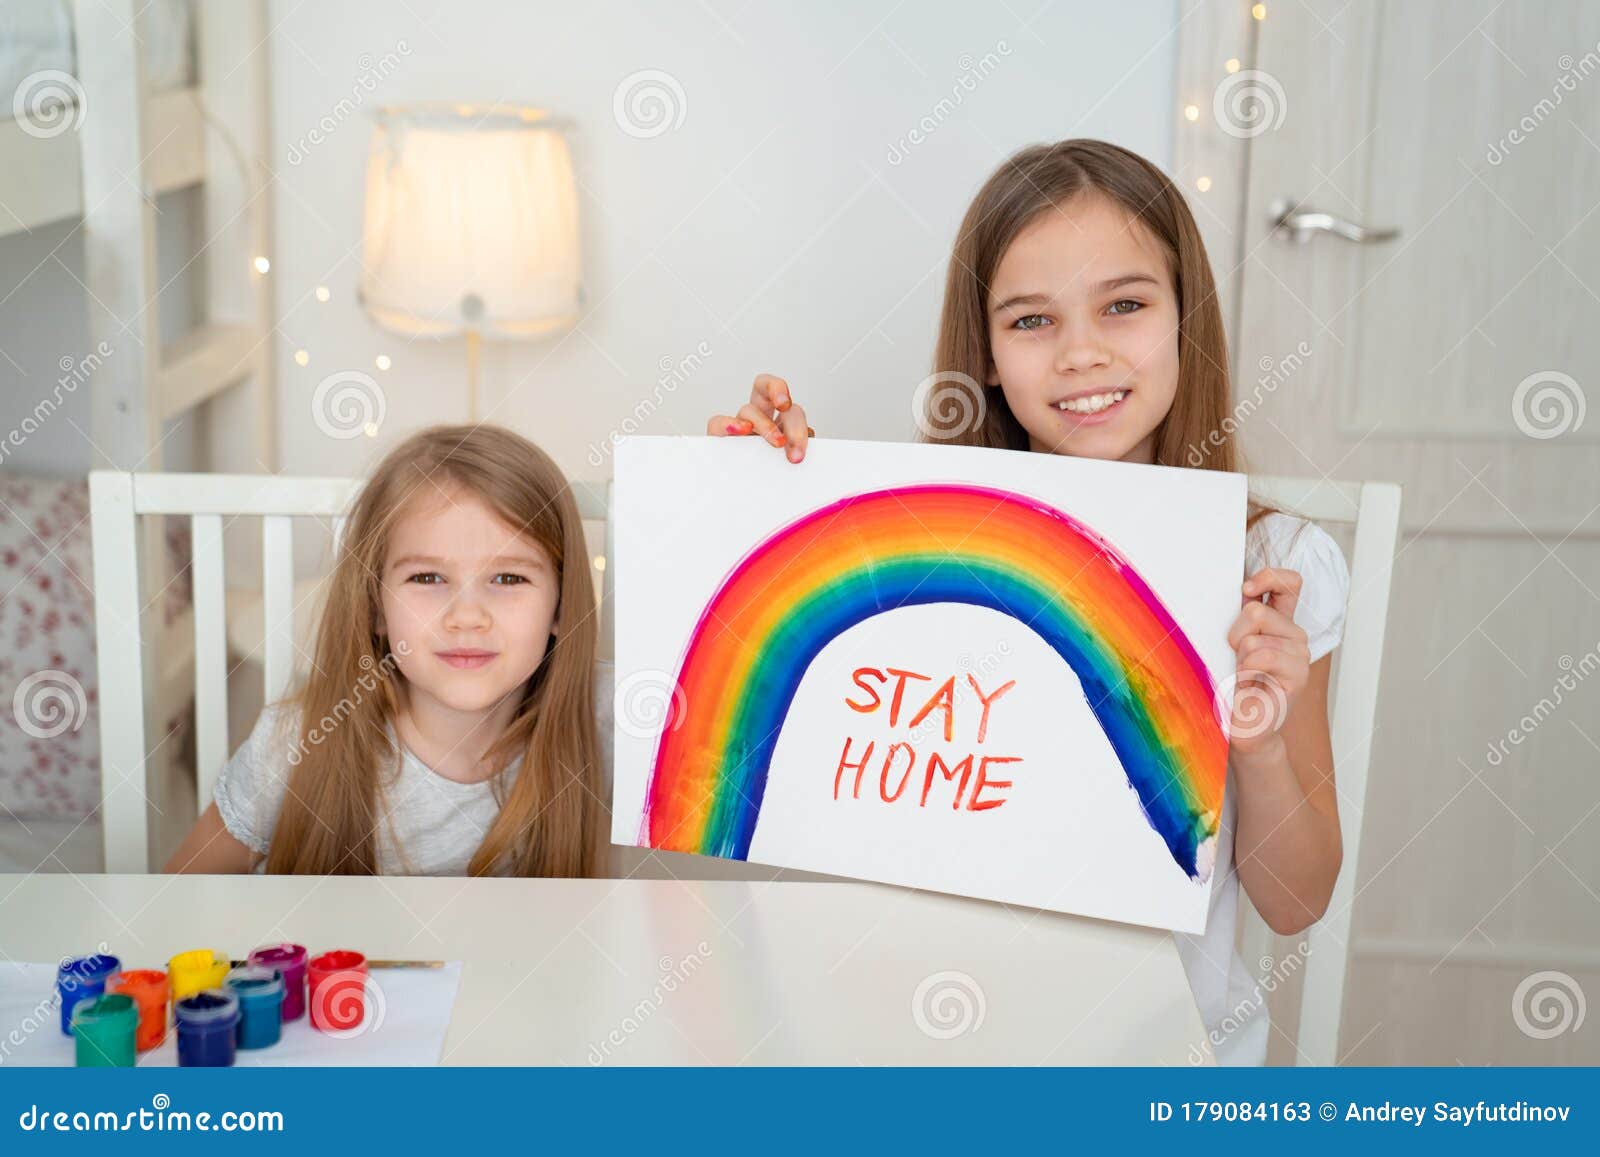 little girls write stay home. flashmob. rainbow